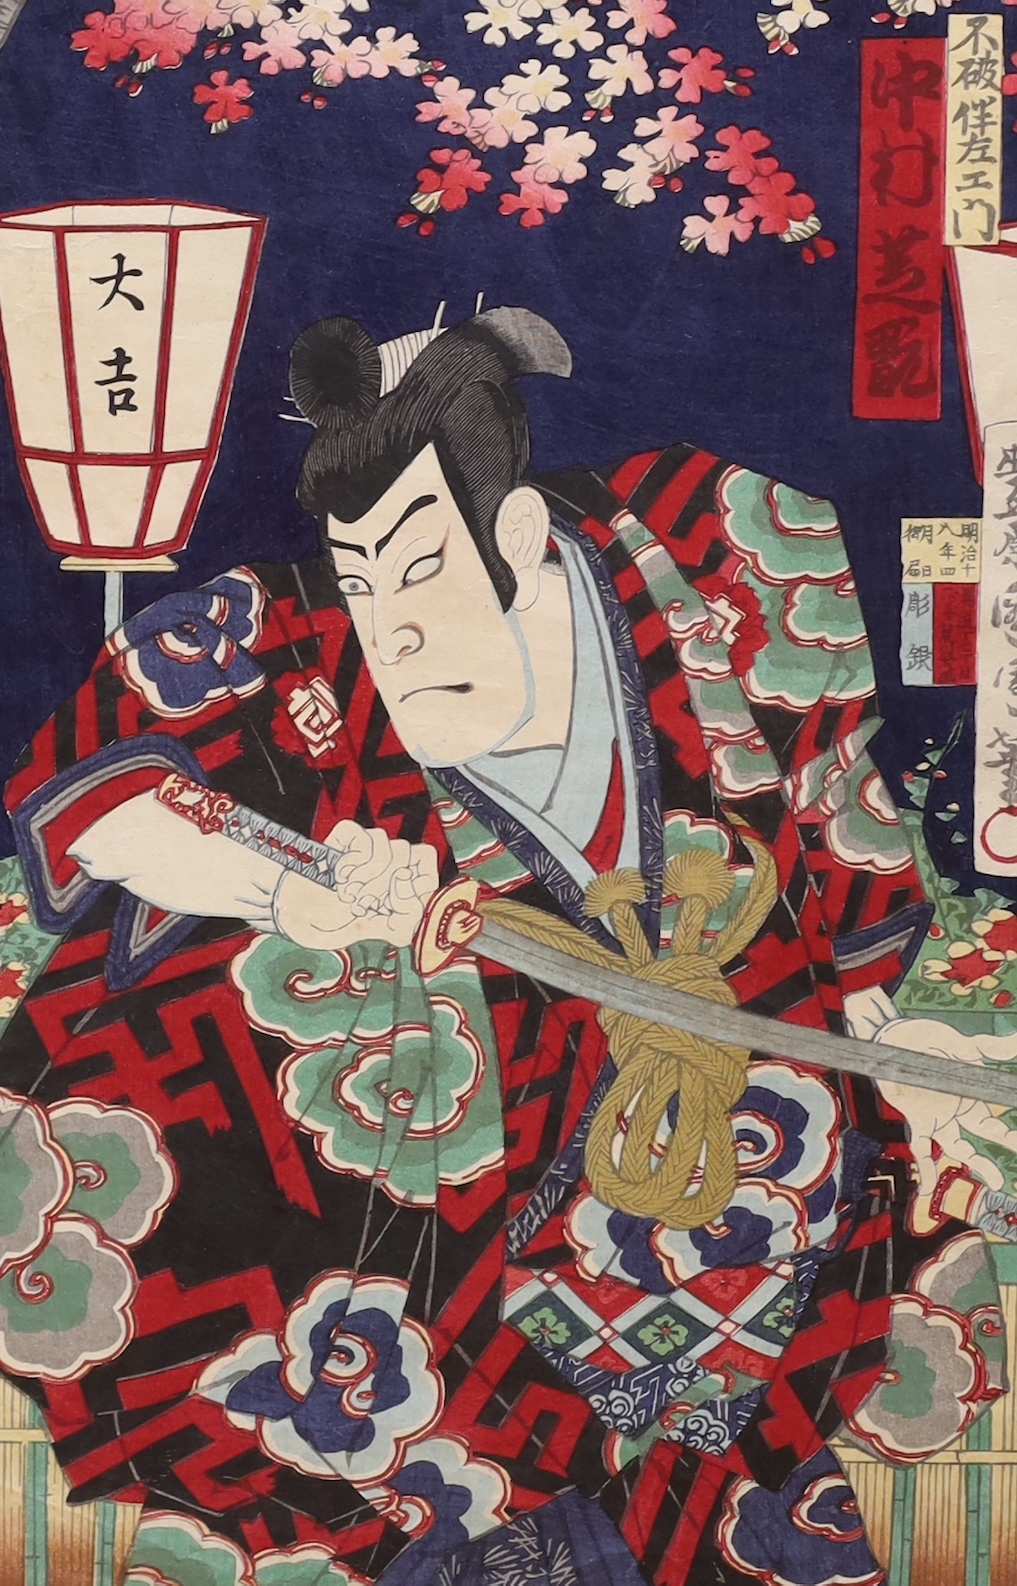 Toyohara Kunichika (1835-1900), Japanese woodblock print, Actor in a Kabuki role, details verso,